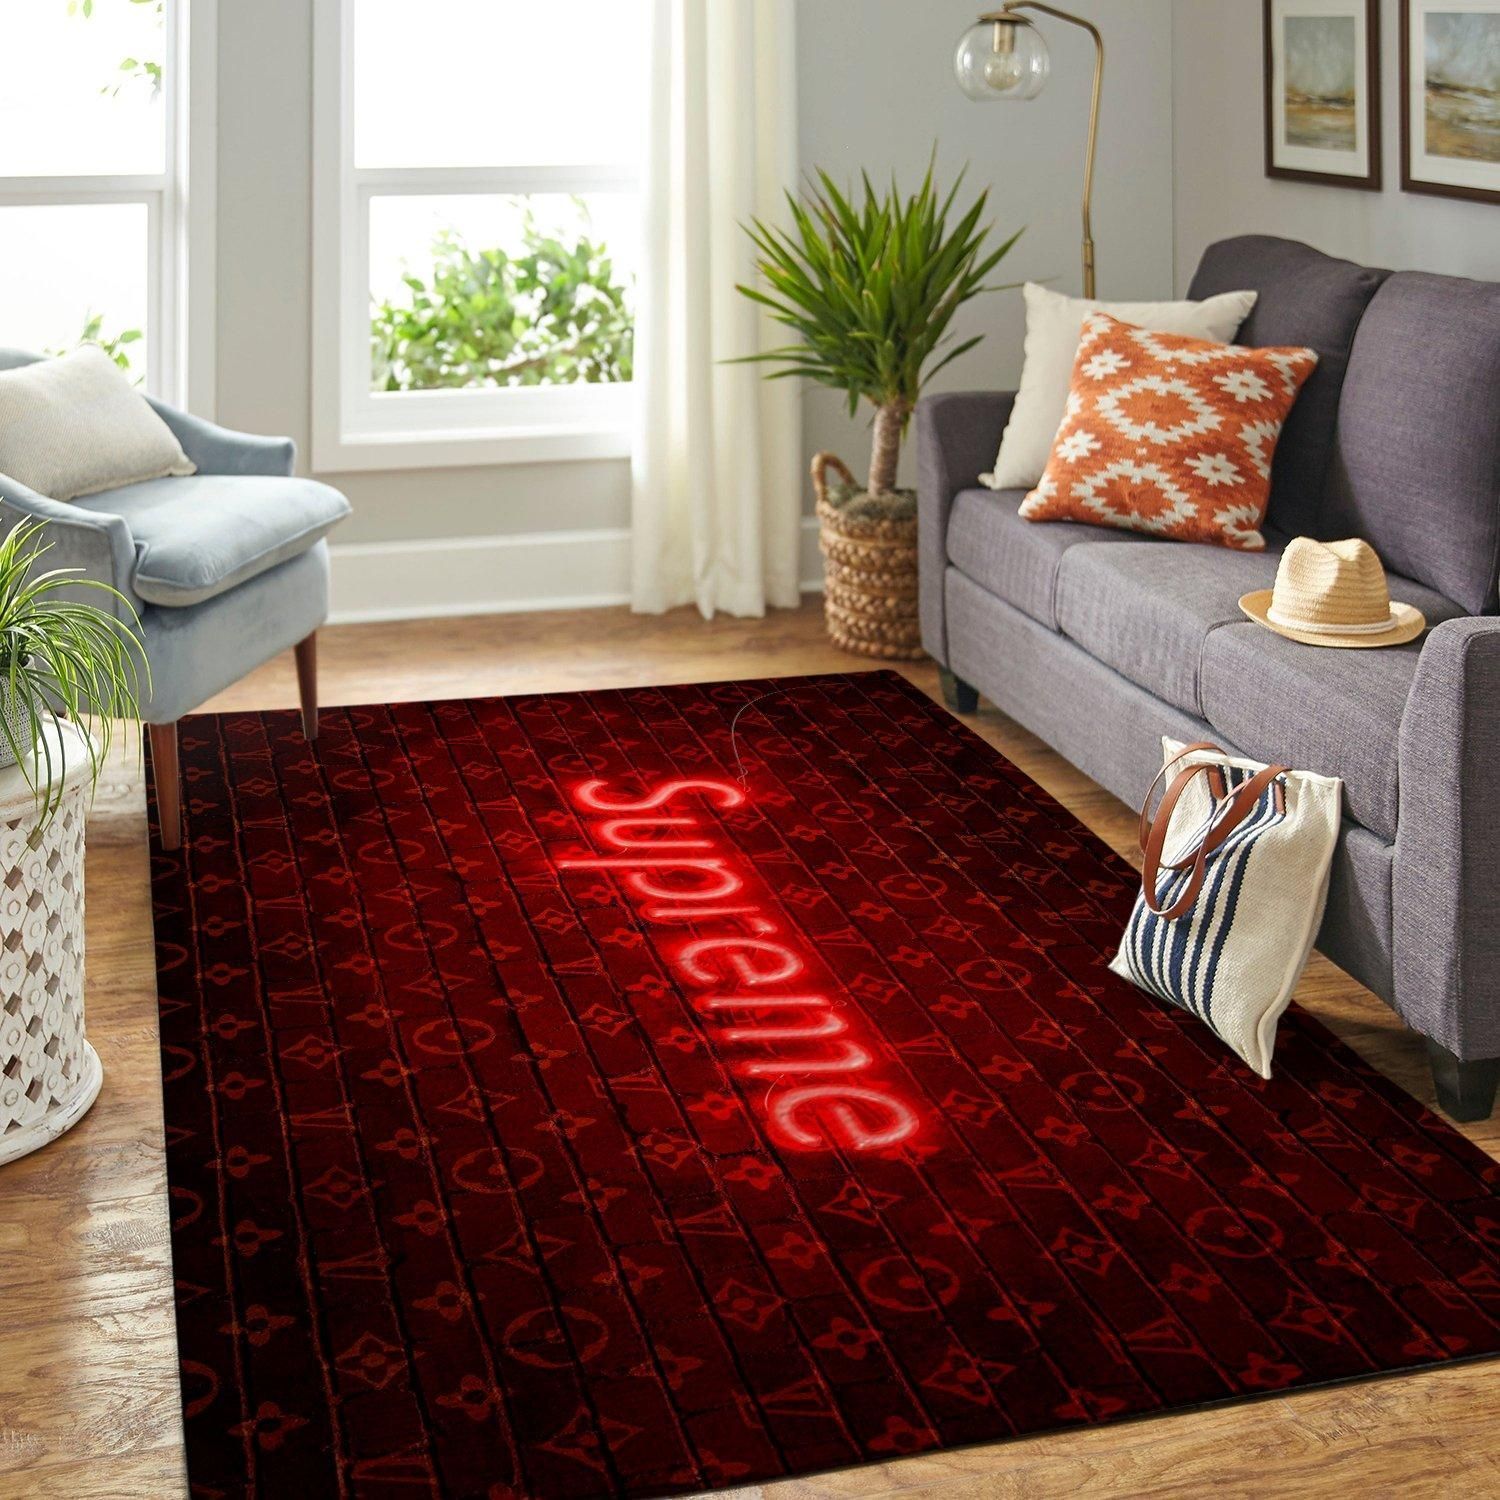 Louis Vuitton Supreme Red Led Rectangle Rug Area Carpet Luxury Fashion Brand Home Decor Door Mat